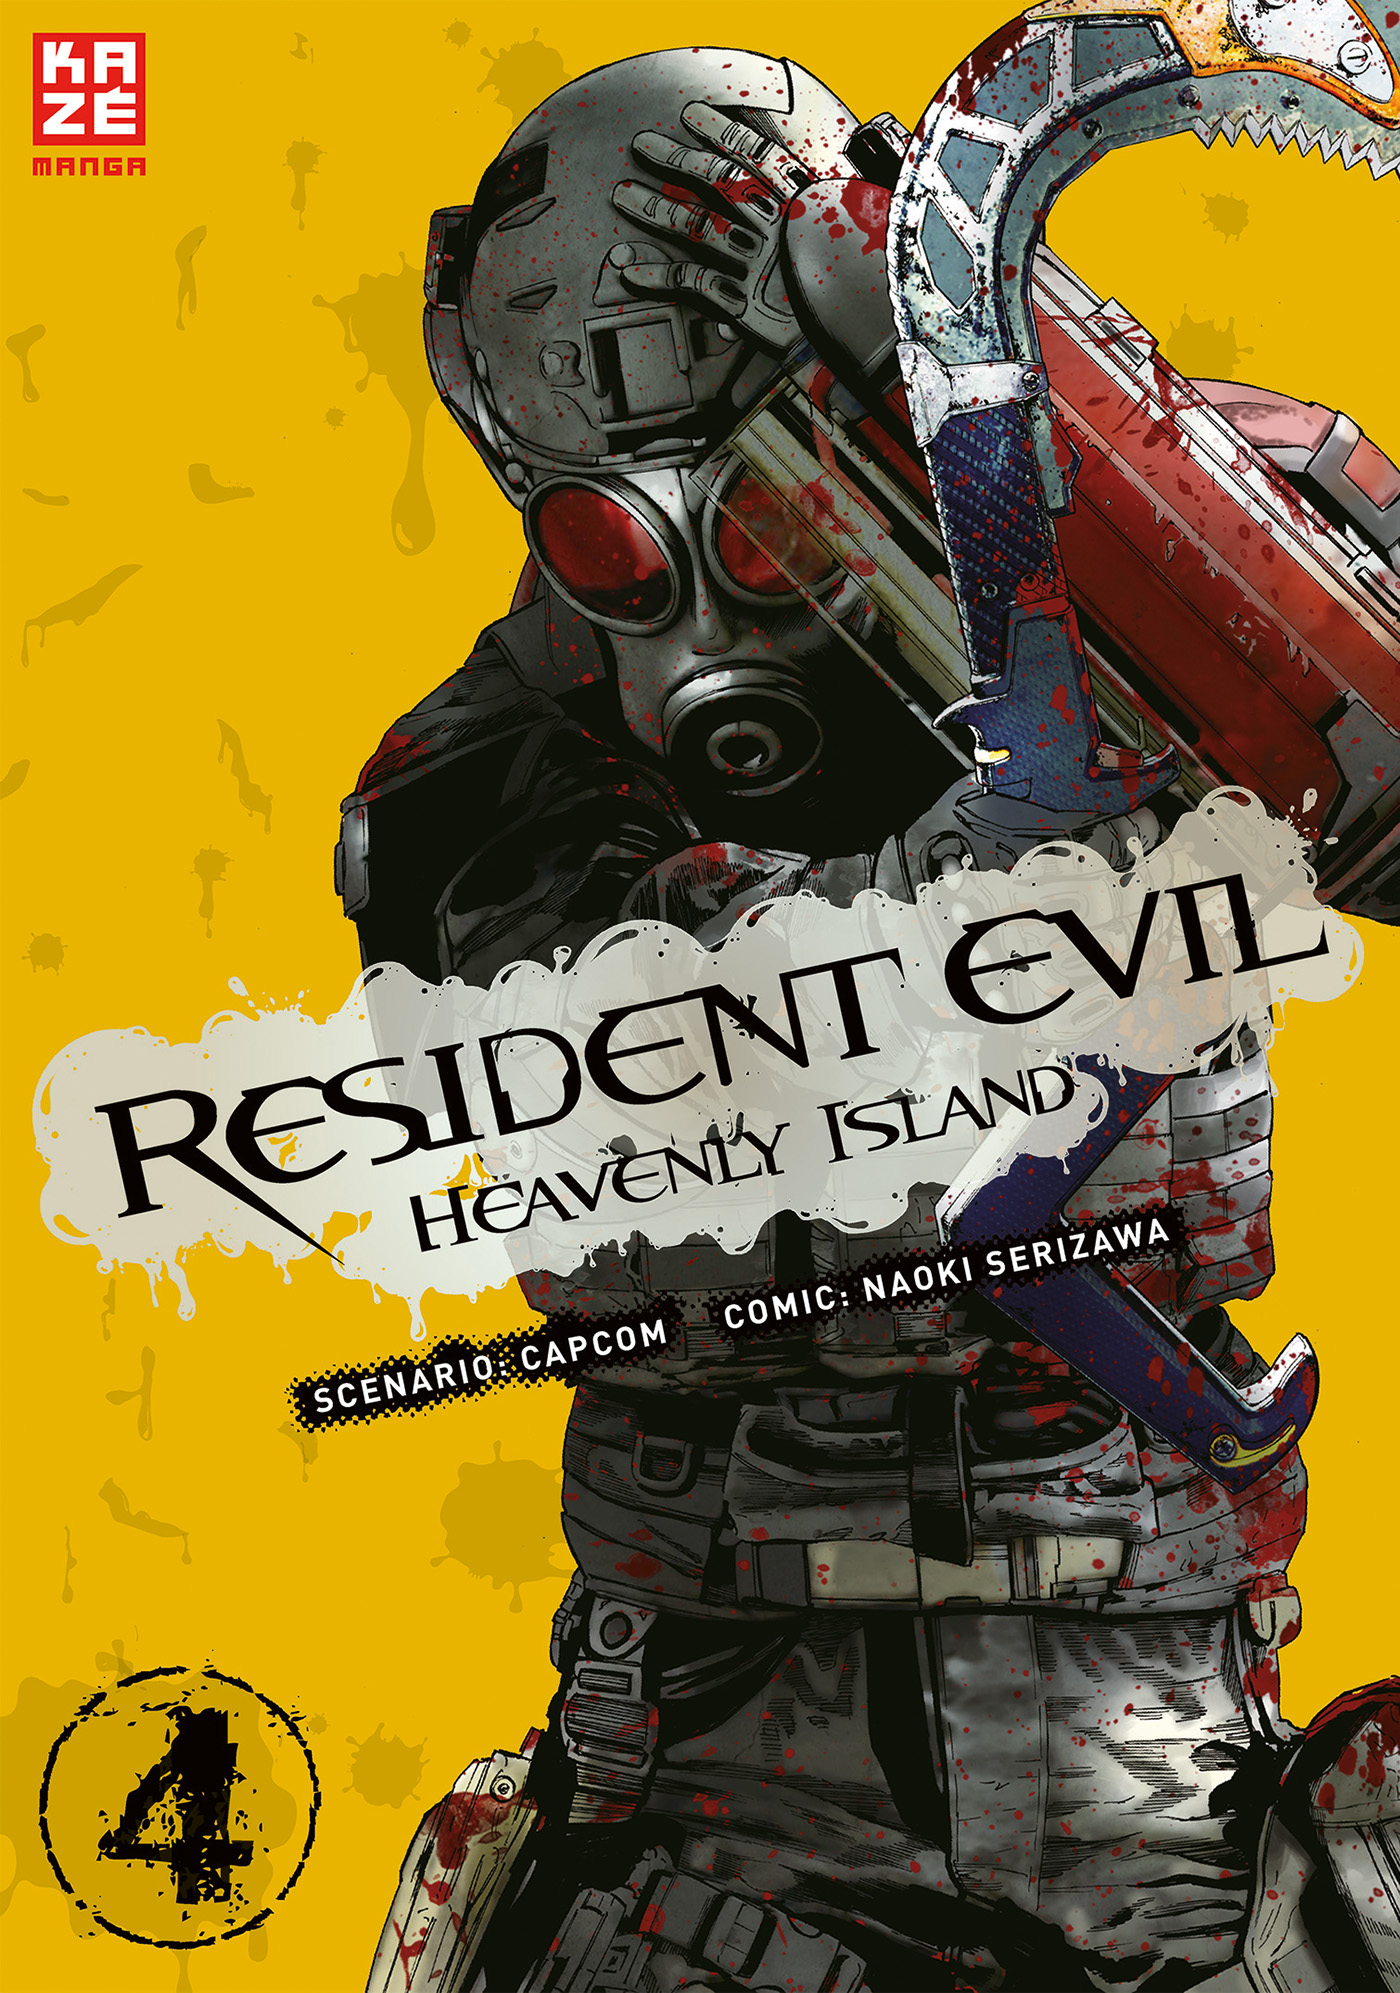 – 4 Evil – Band Resident Heavenly Island